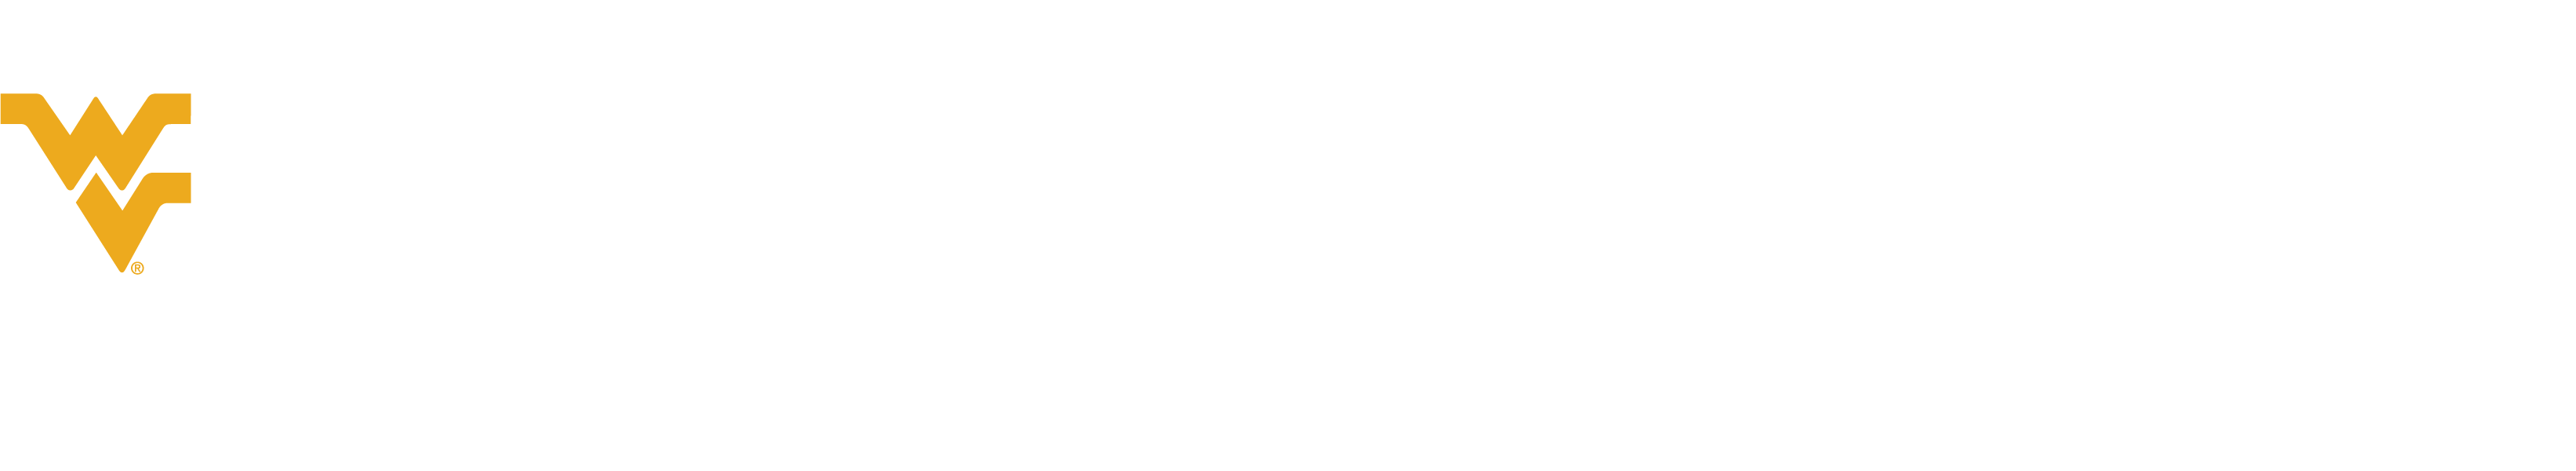 West Virginia Public Education Collaborative